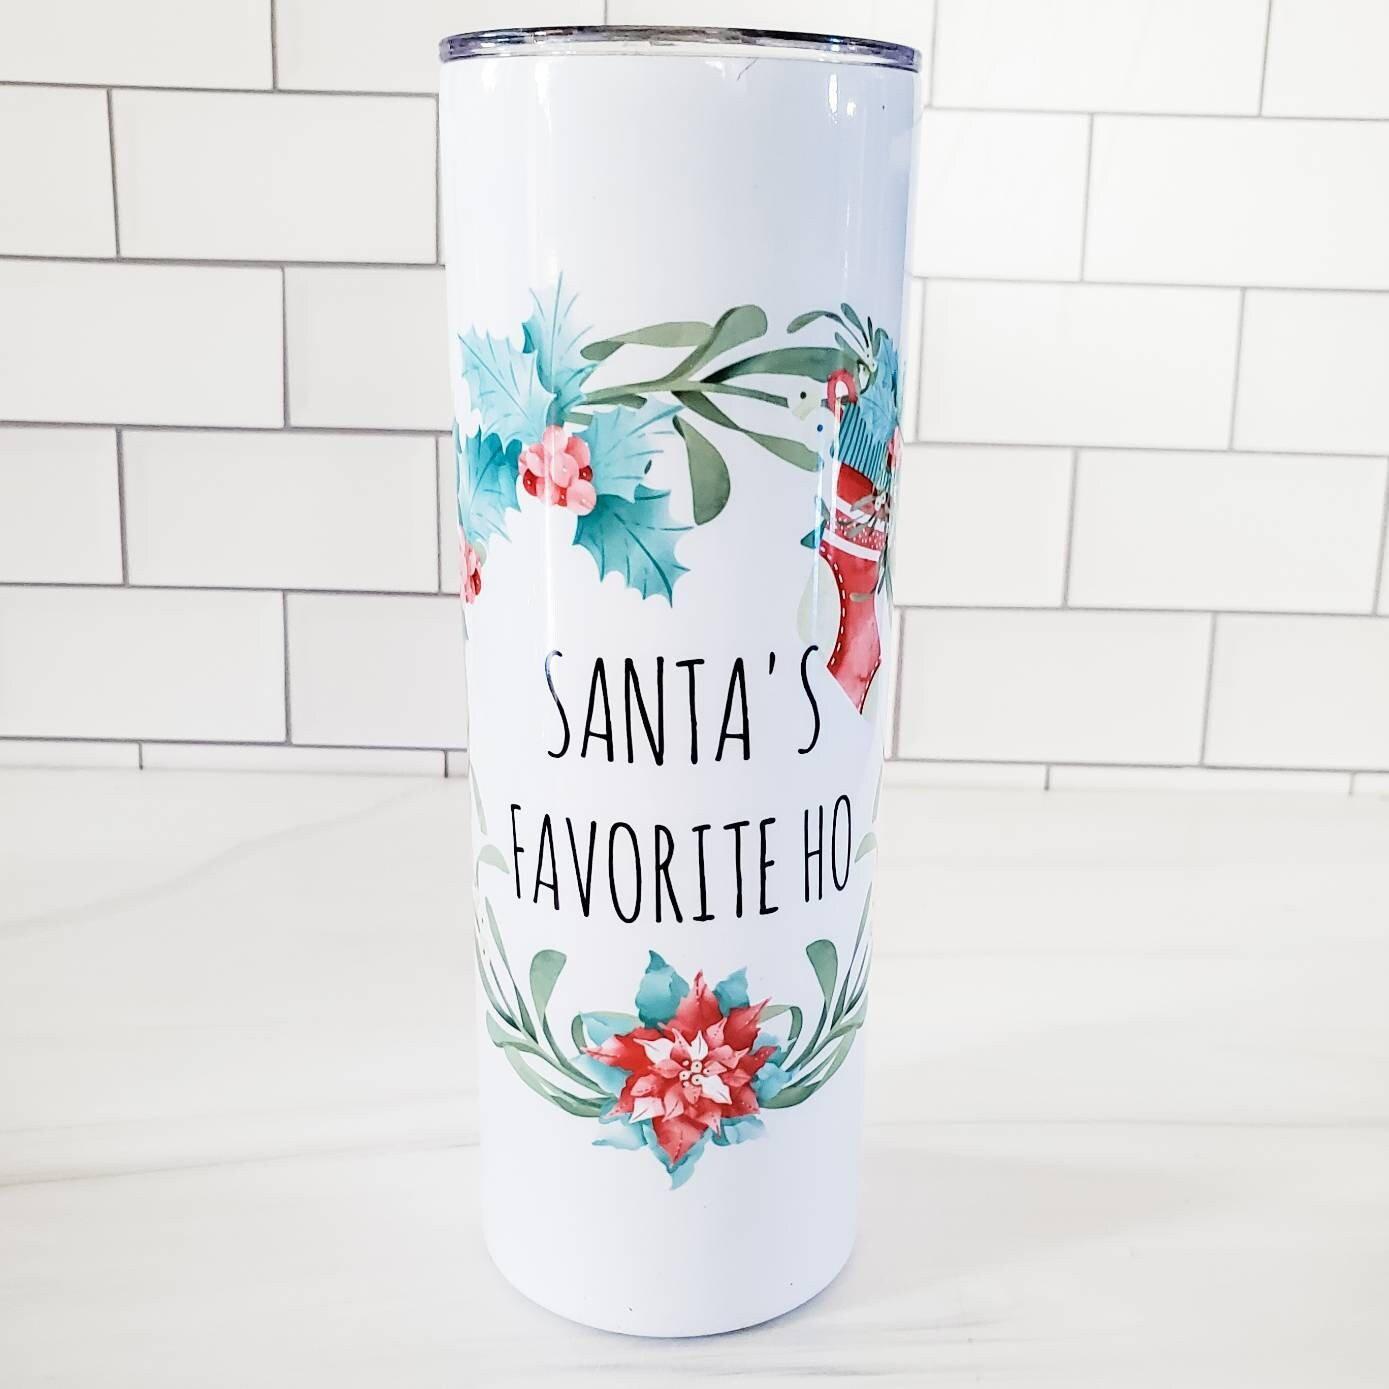 Santa's Favorite Ho Christmas Skinny Tumbler Salt and Sparkle